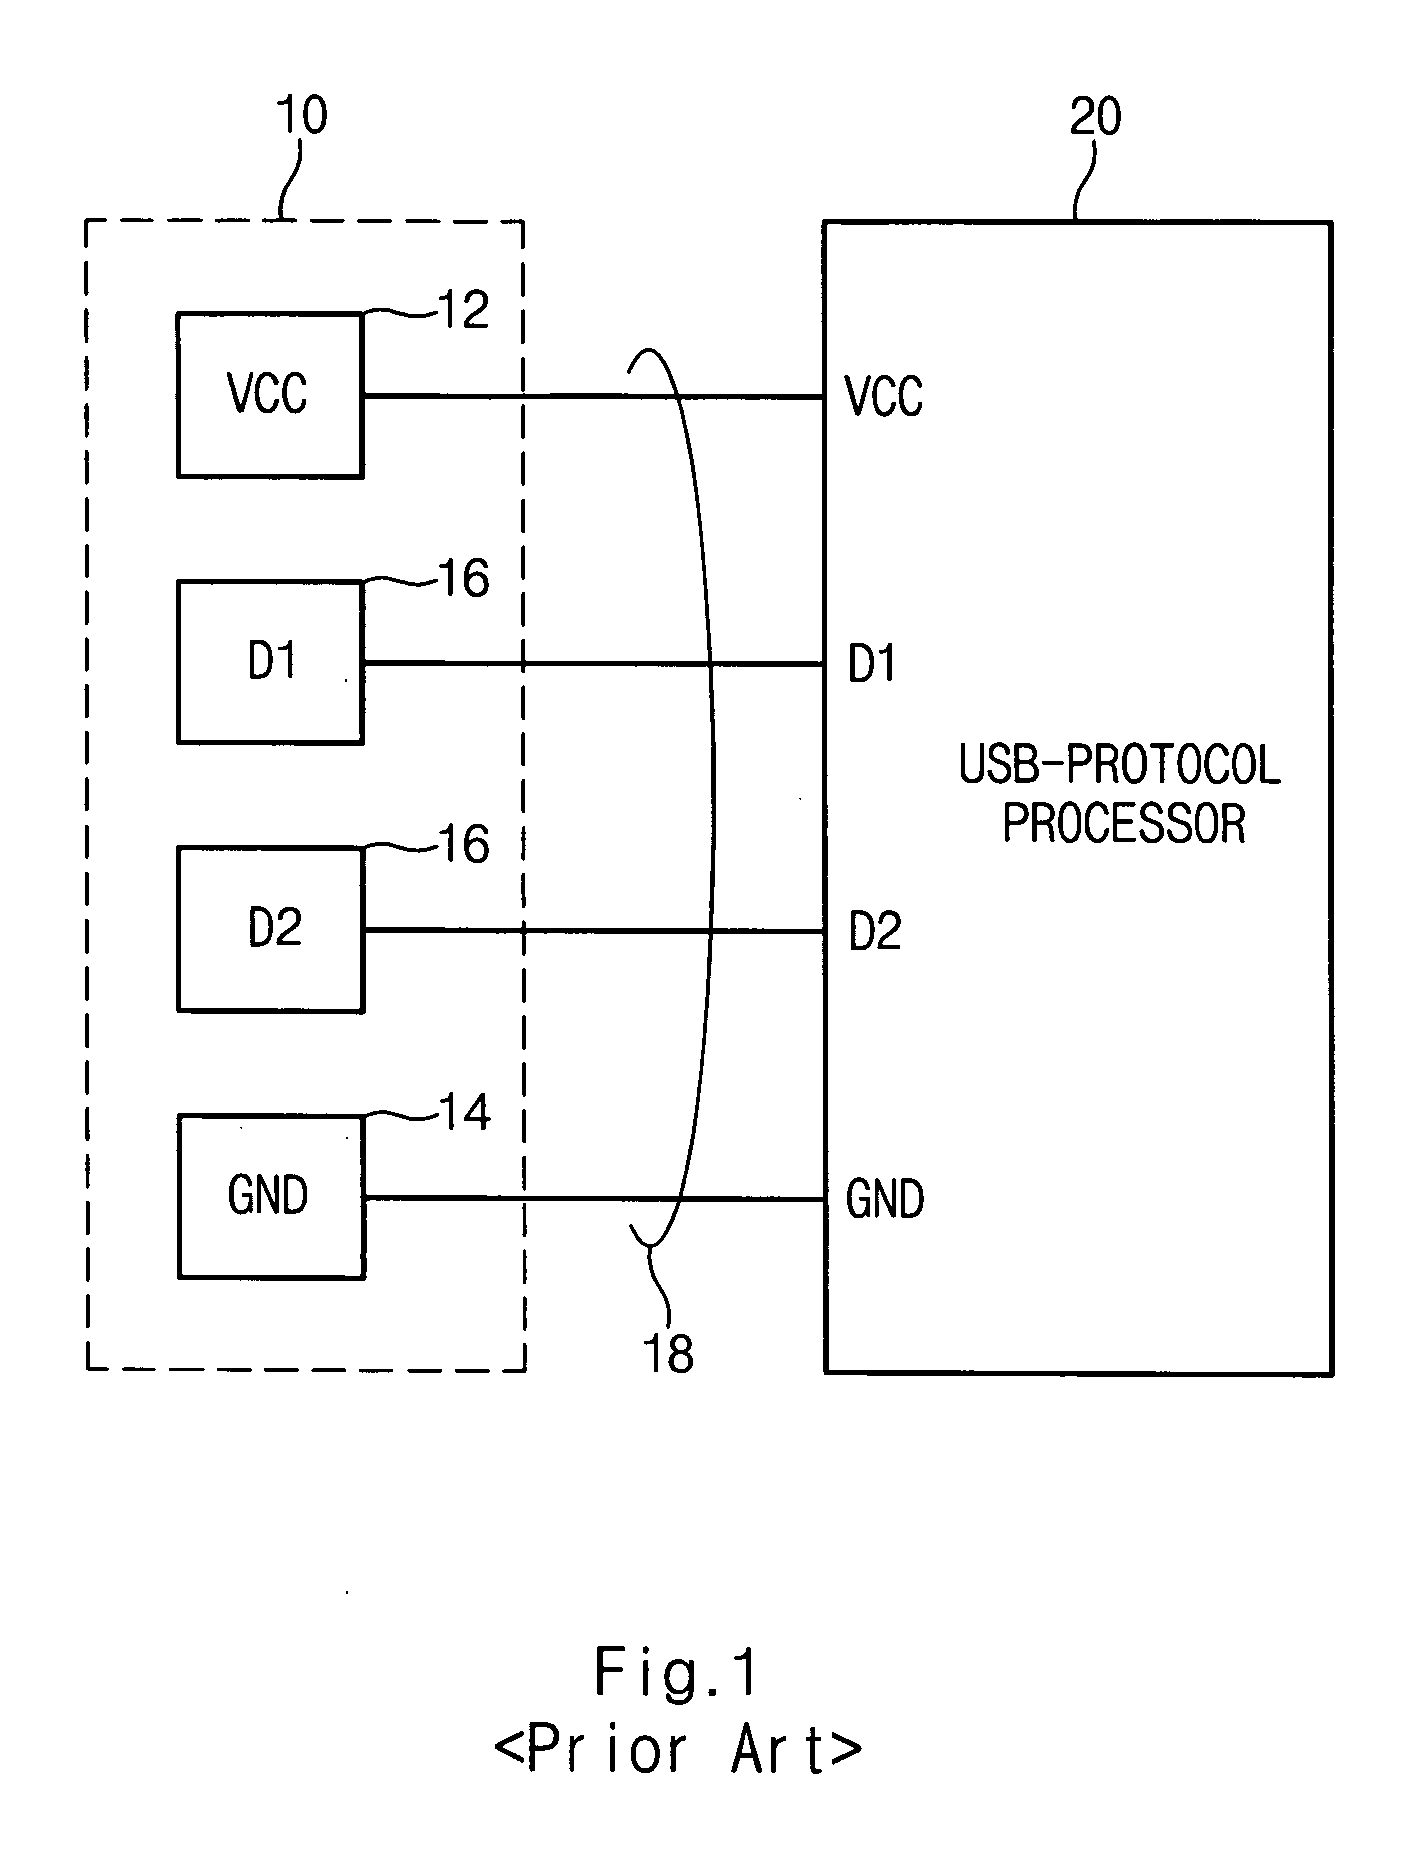 Multi-protocol serial interface system